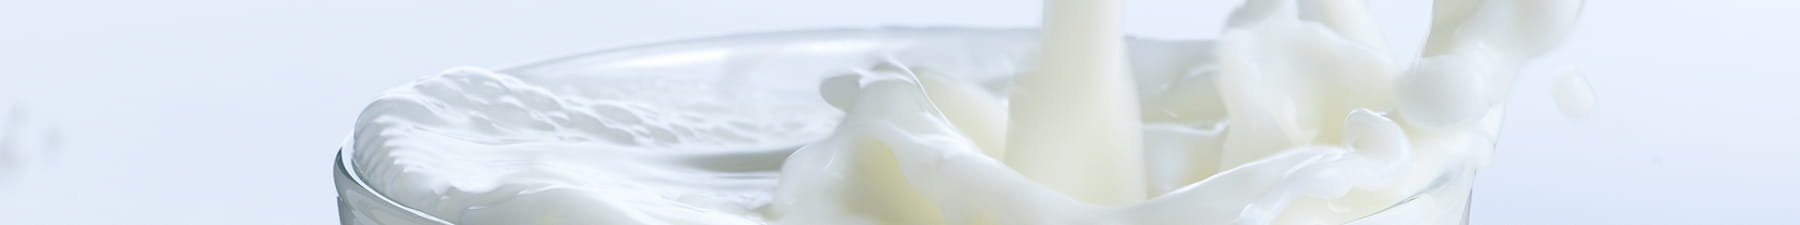 White milk in glass